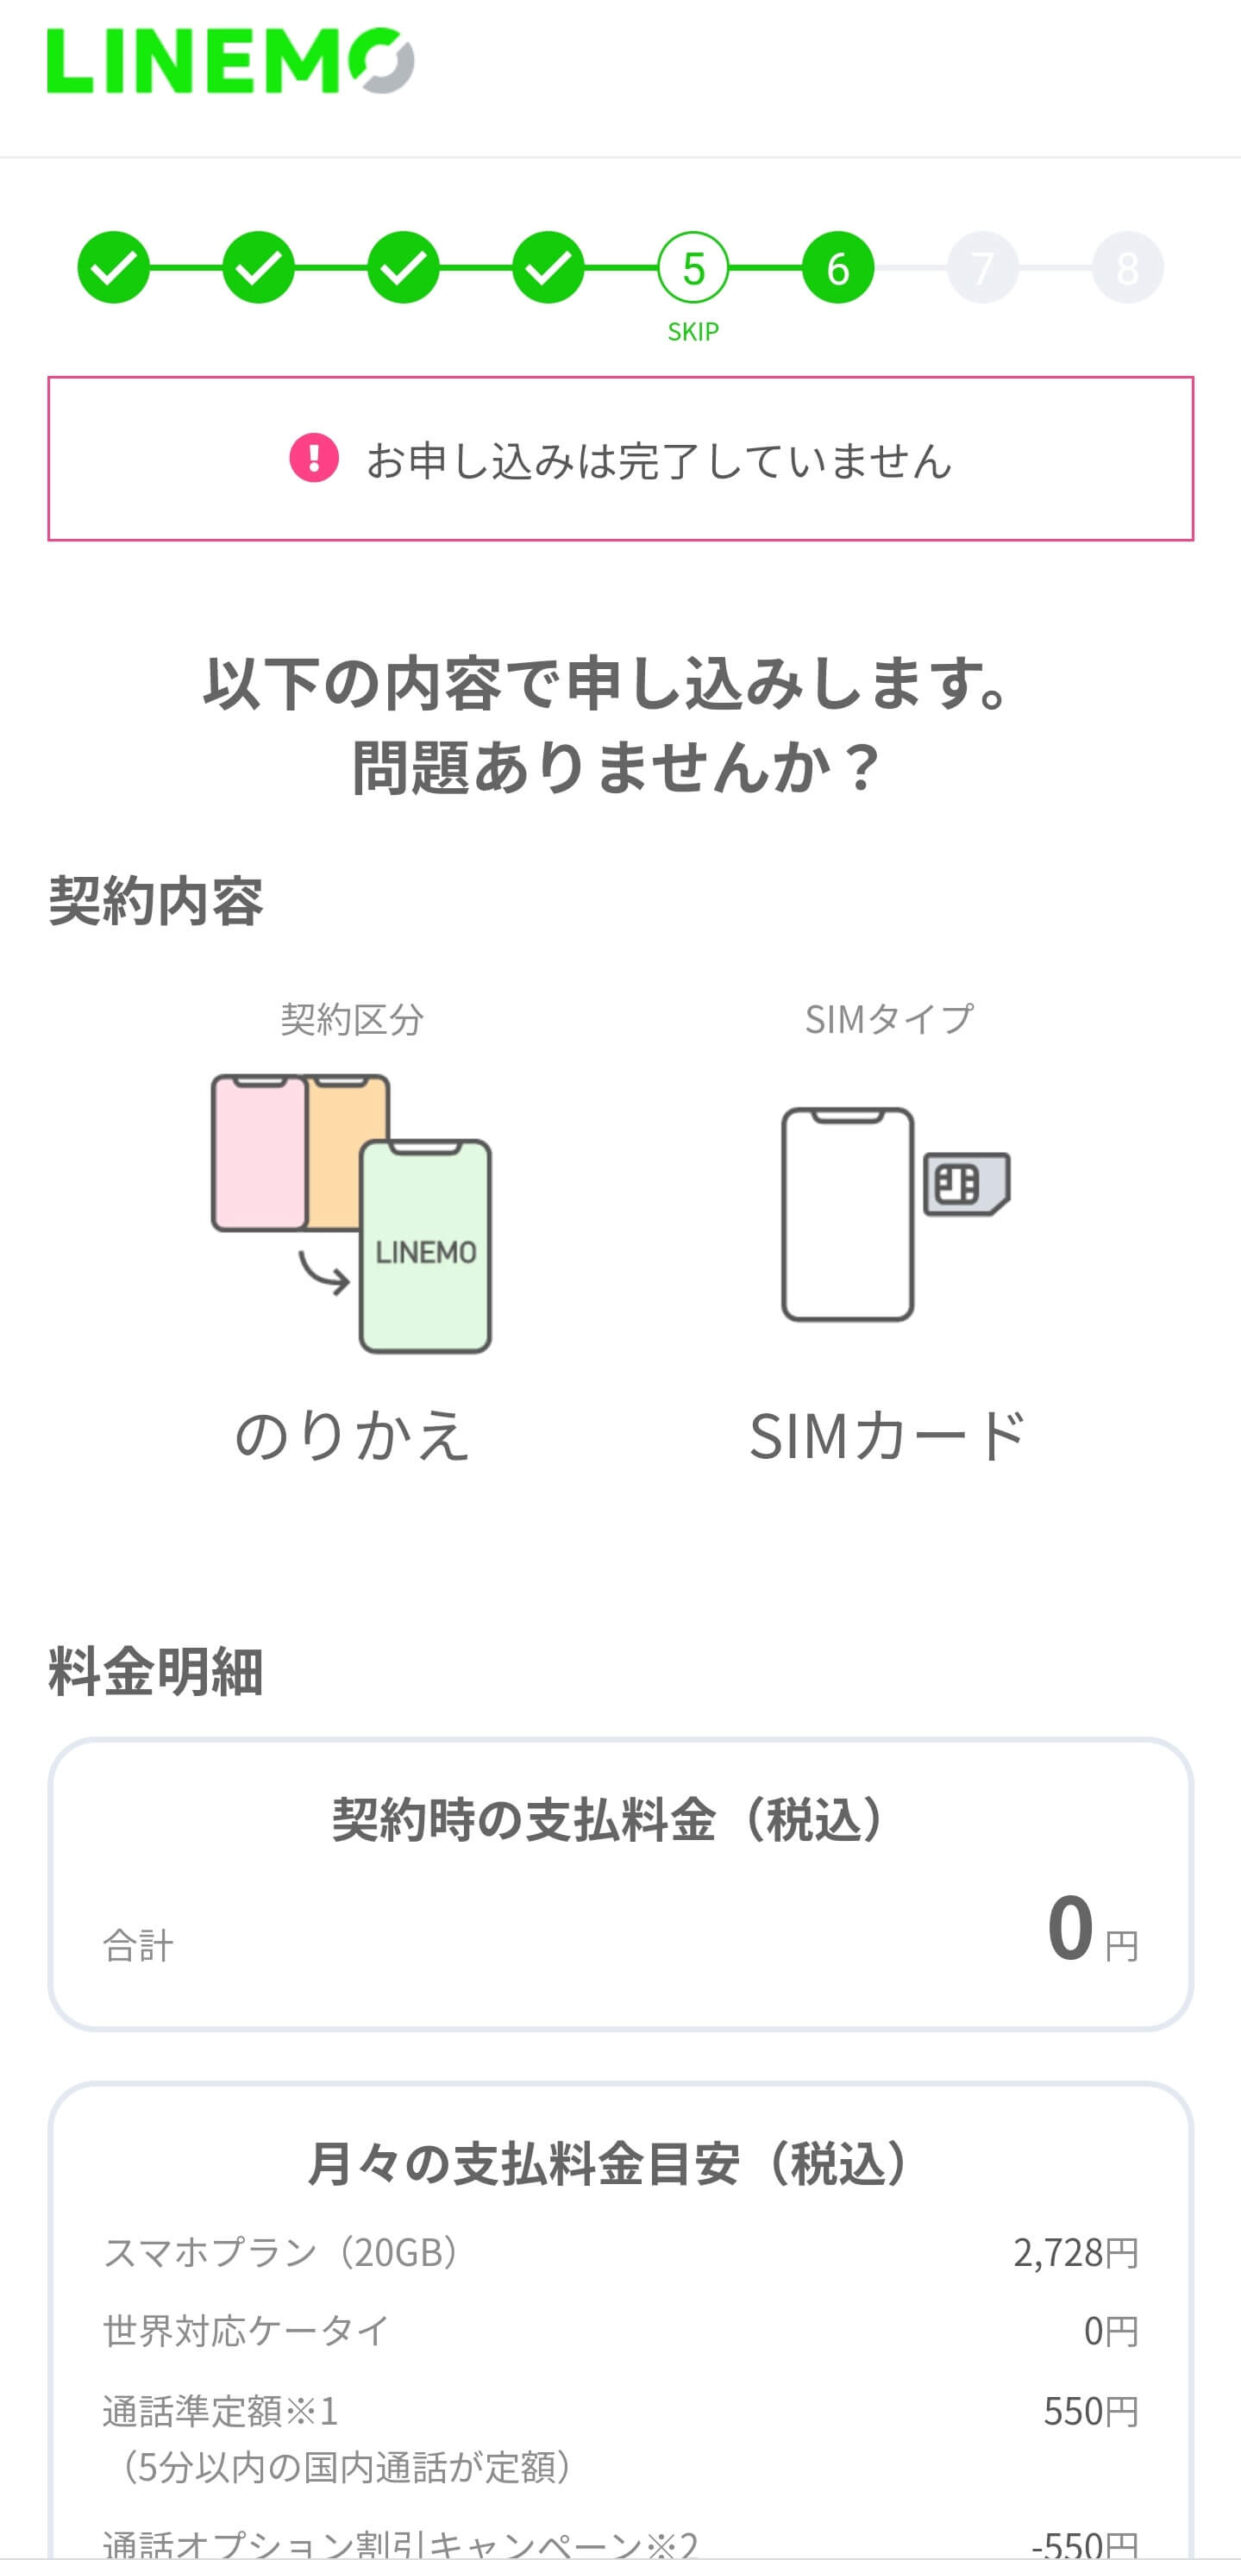 linemo-application-21-scaled-1 絶対に格安SIM選びで失敗しないLINEMO(ラインモ)の解説サイト